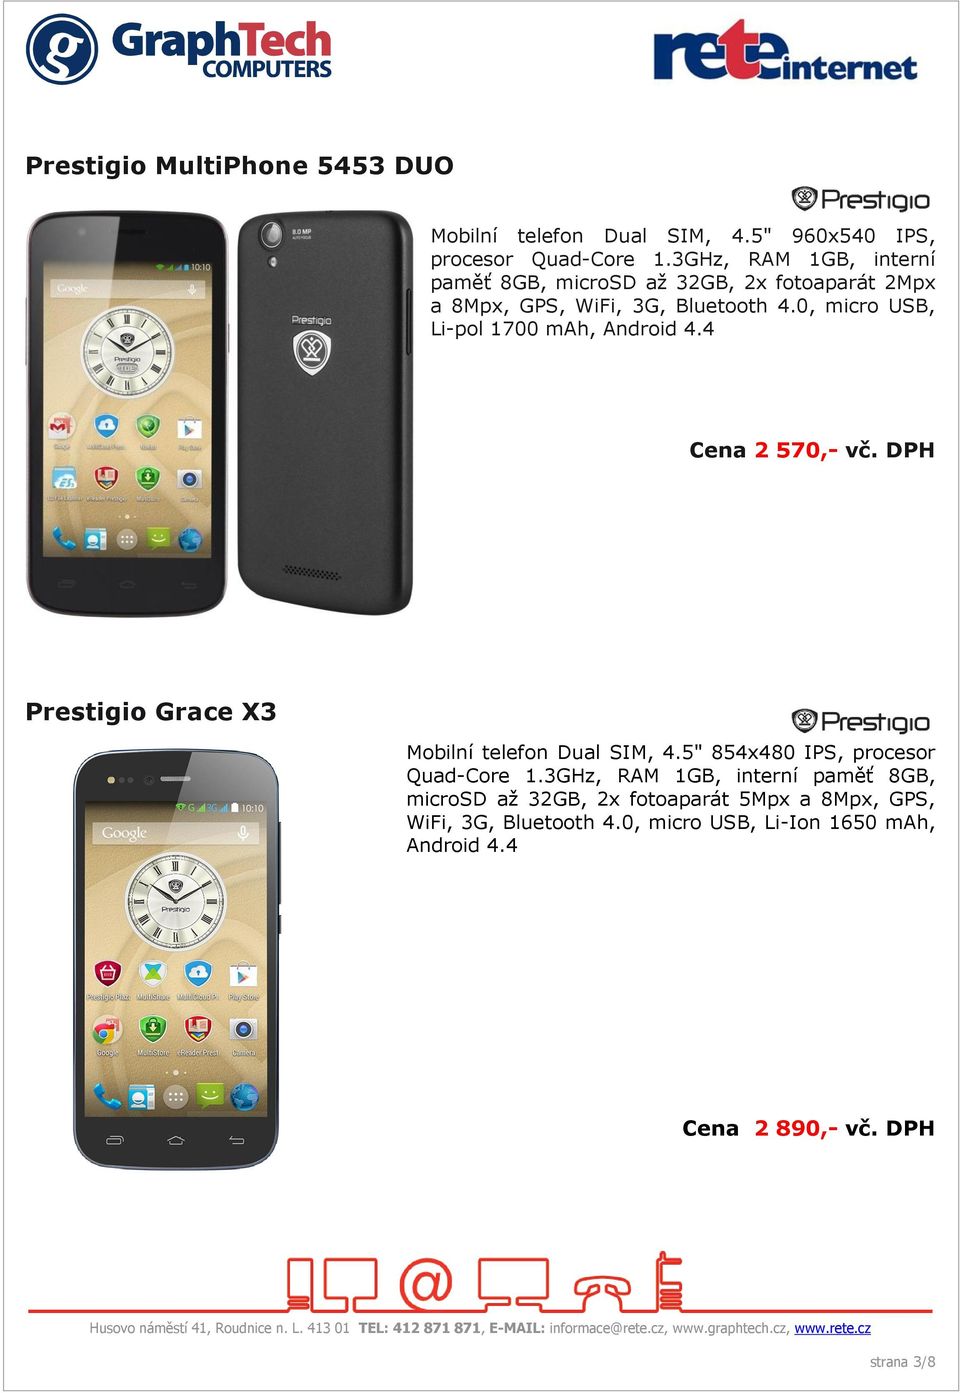 0, micro USB, Li-pol 1700 mah, Android 4.4 Cena 2 570,- vč. DPH Prestigio Grace X3 Mobilní telefon Dual SIM, 4.